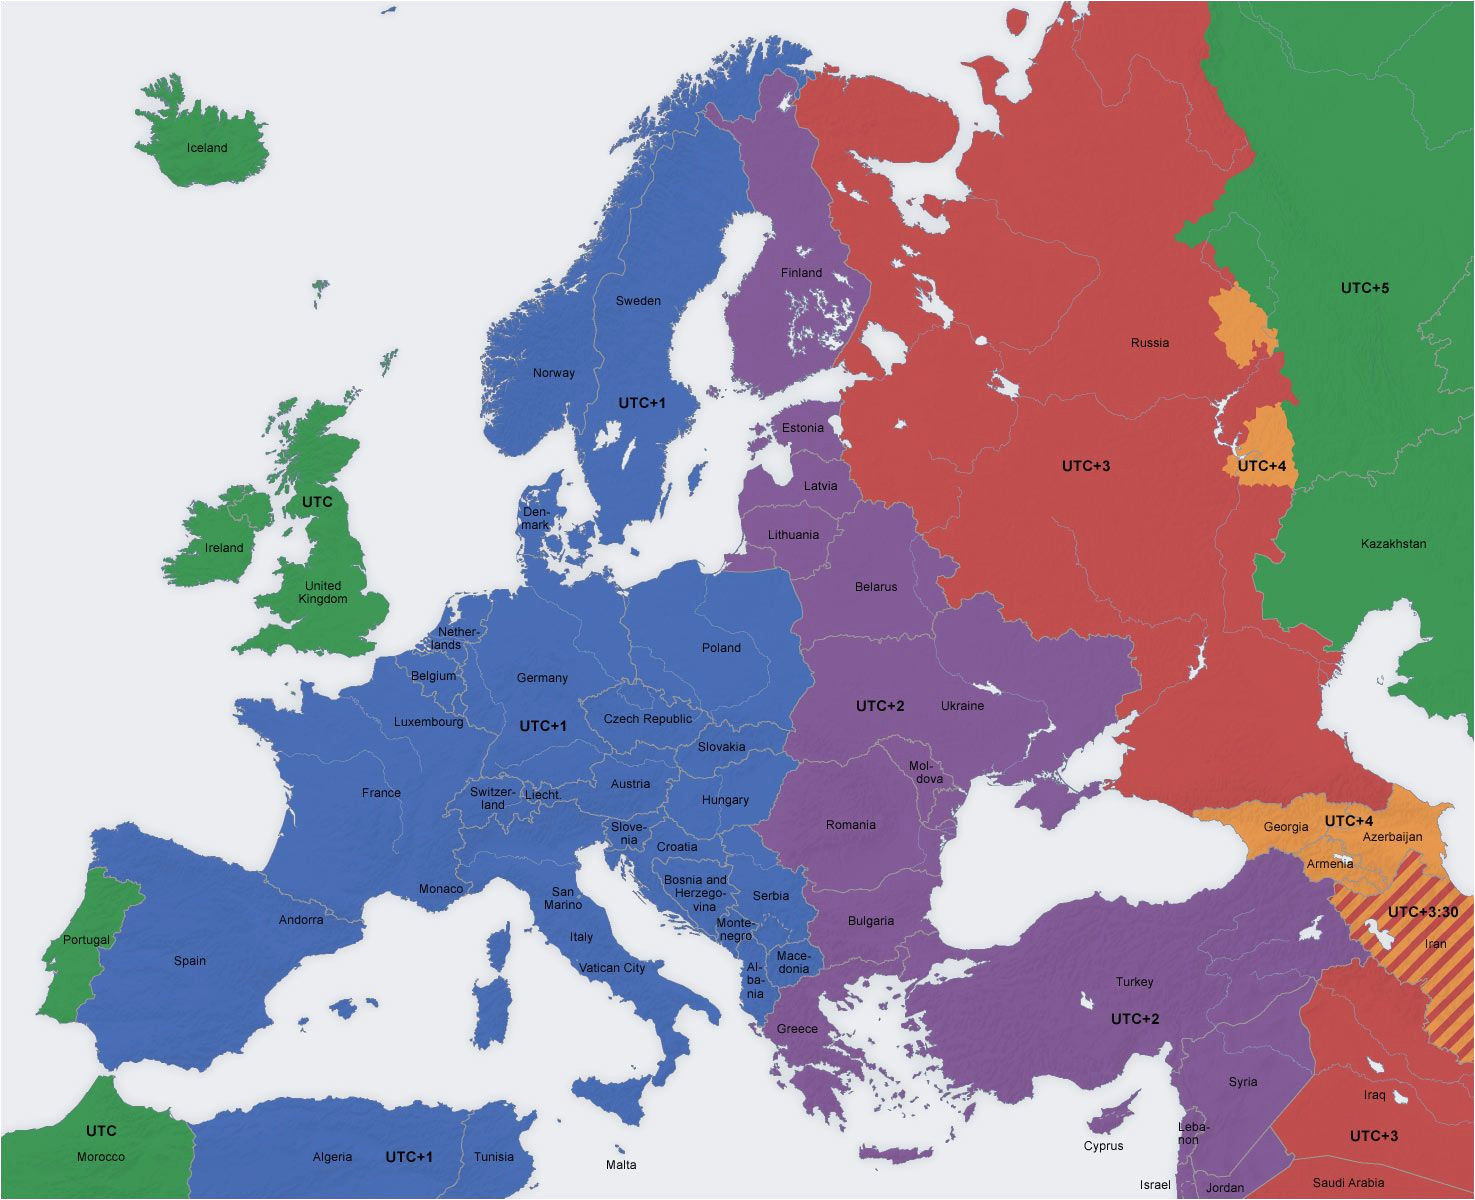 Cyprus Map Of Europe Europe Map Time Zones Utc Utc Wet Western European Time